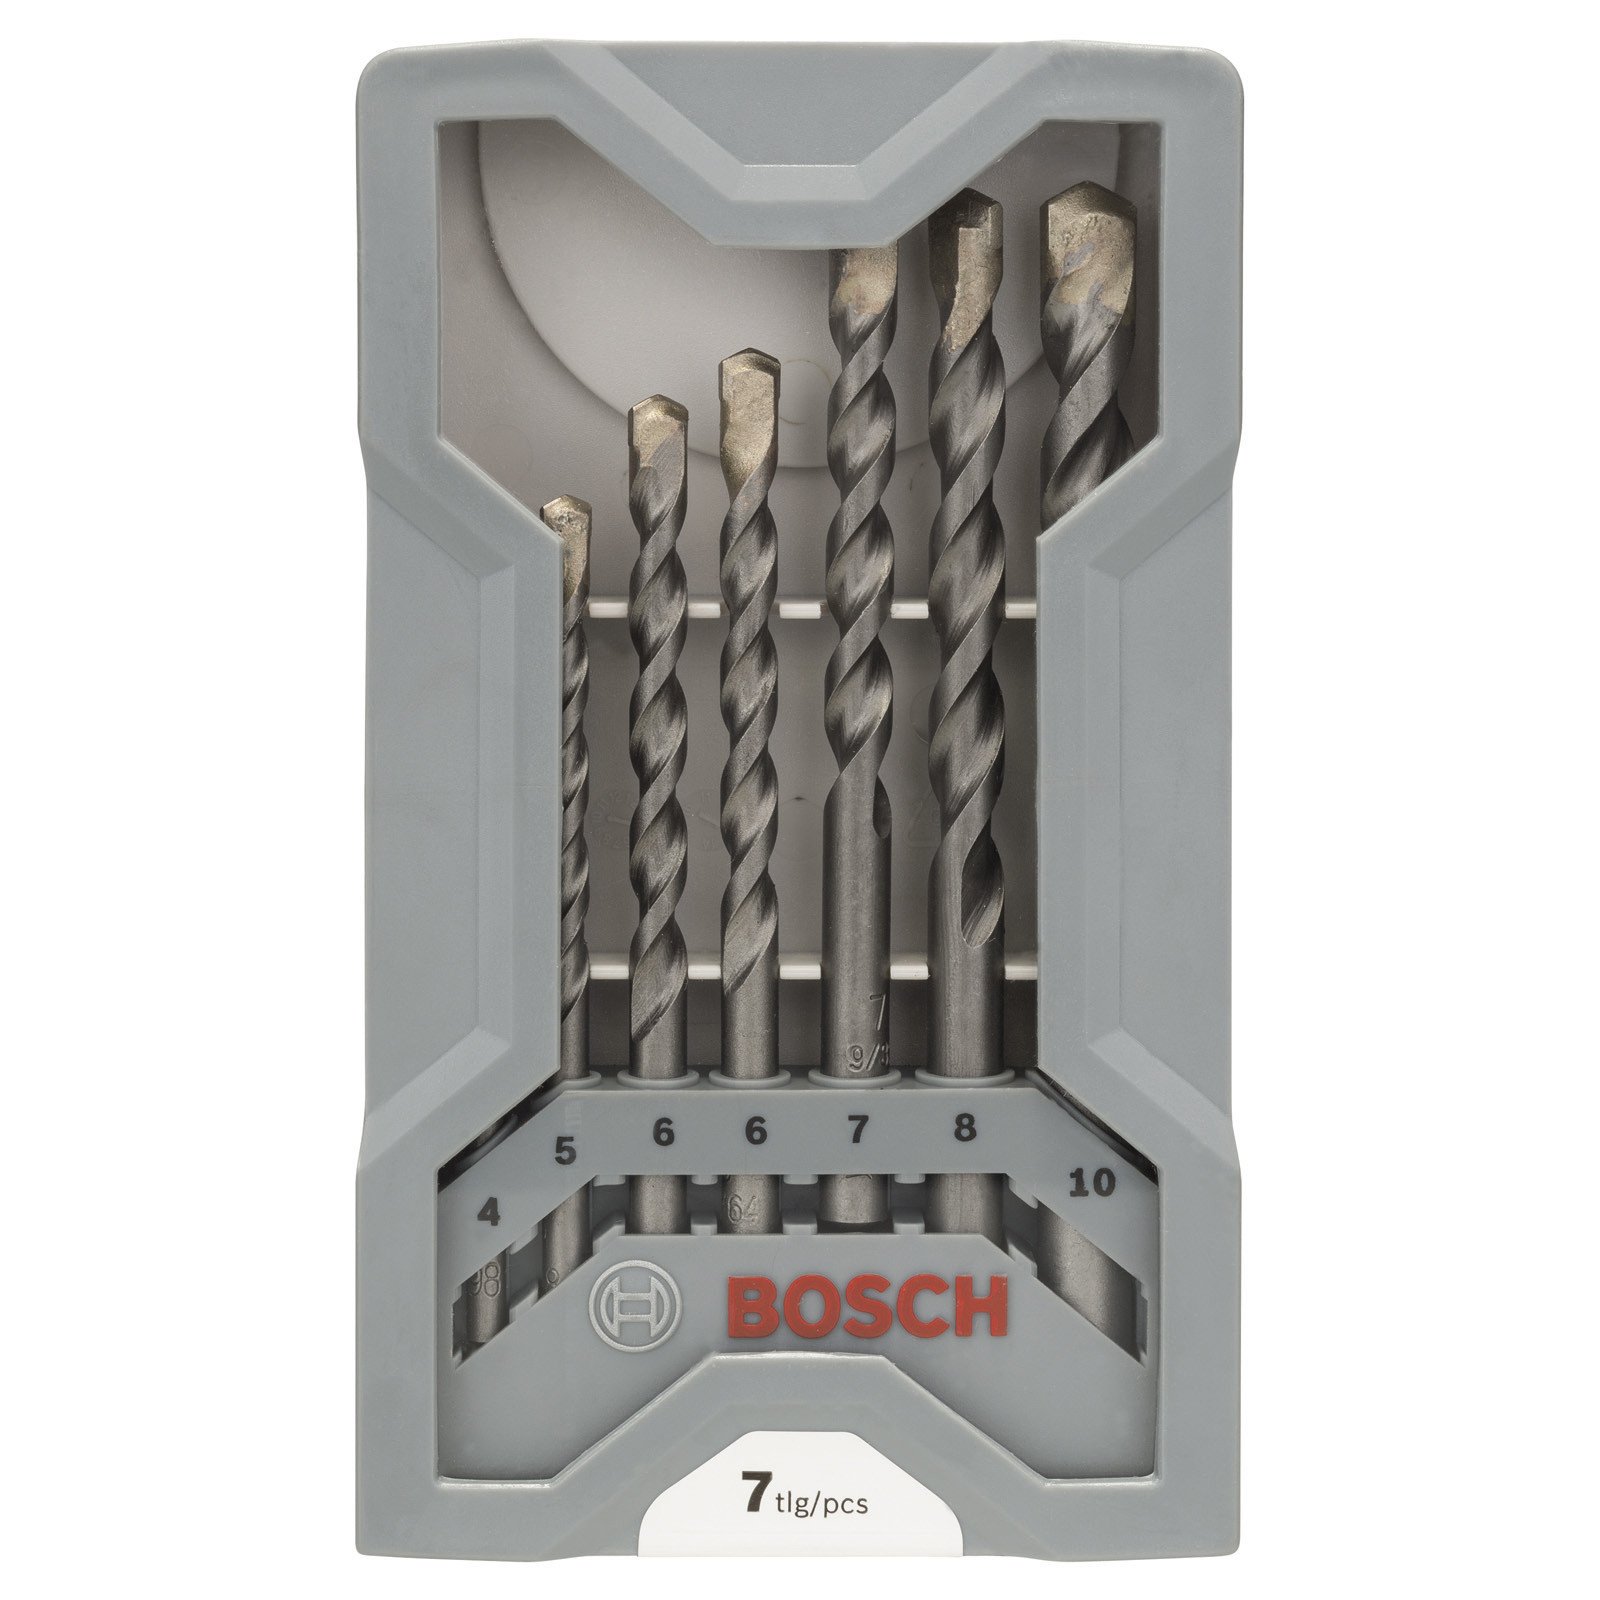 Bosch Betonbohrer CYL-3 Set,Silver Percussion,7-teilig,4,5,5,5,6,7,8,10 mm 